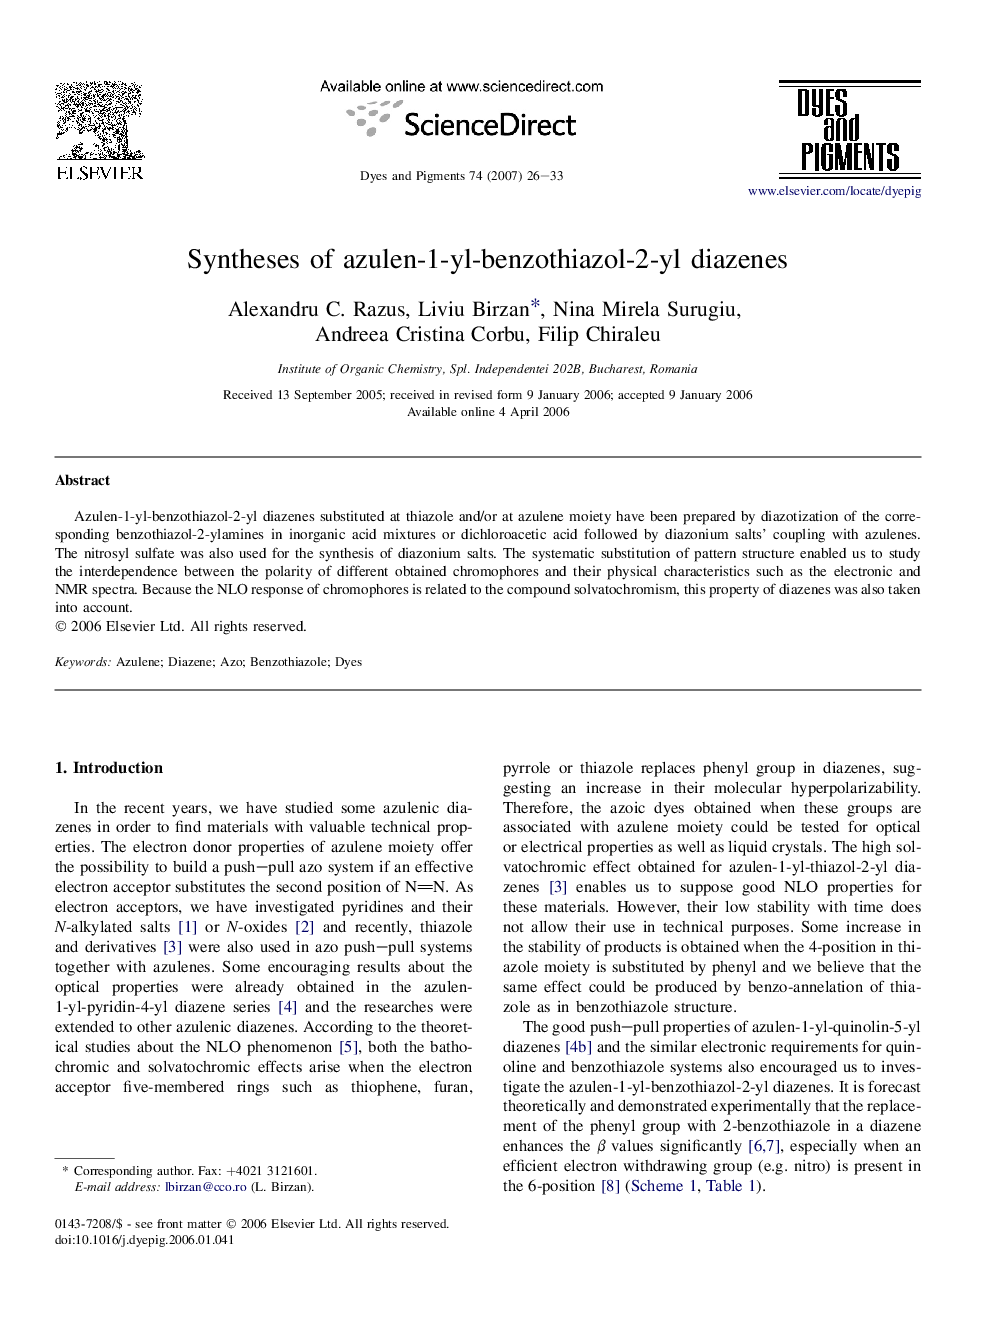 Syntheses of azulen-1-yl-benzothiazol-2-yl diazenes